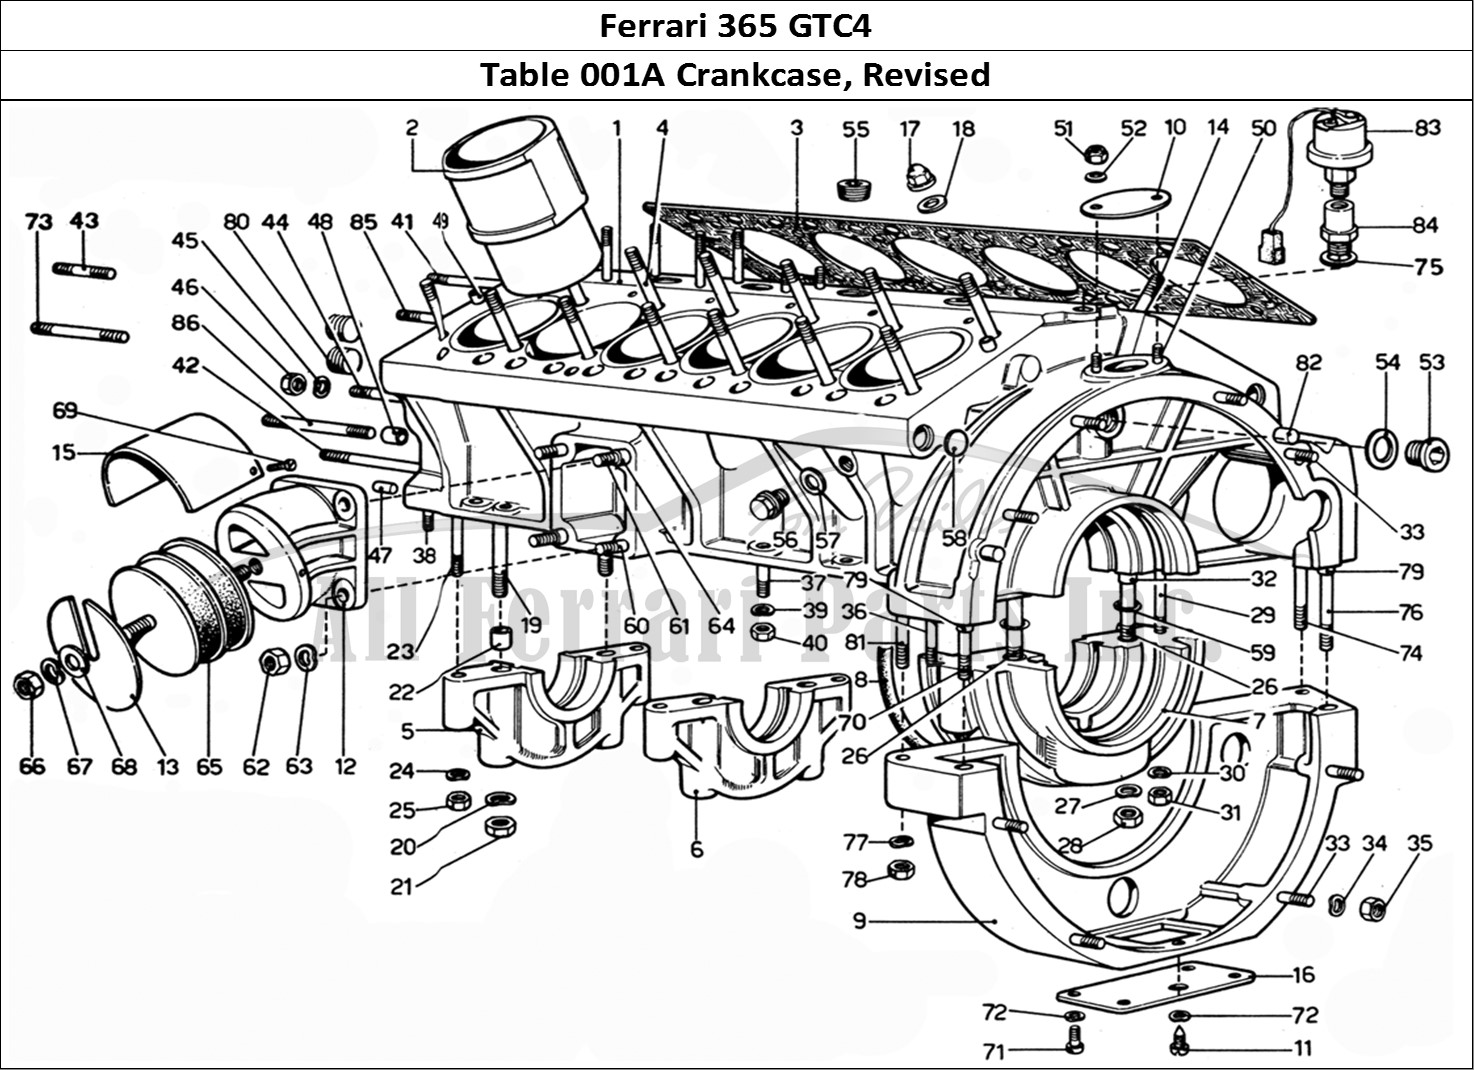 Ferrari Parts Ferrari 365 GTC4 (Mechanical) Page 001 Engine Block - Revision